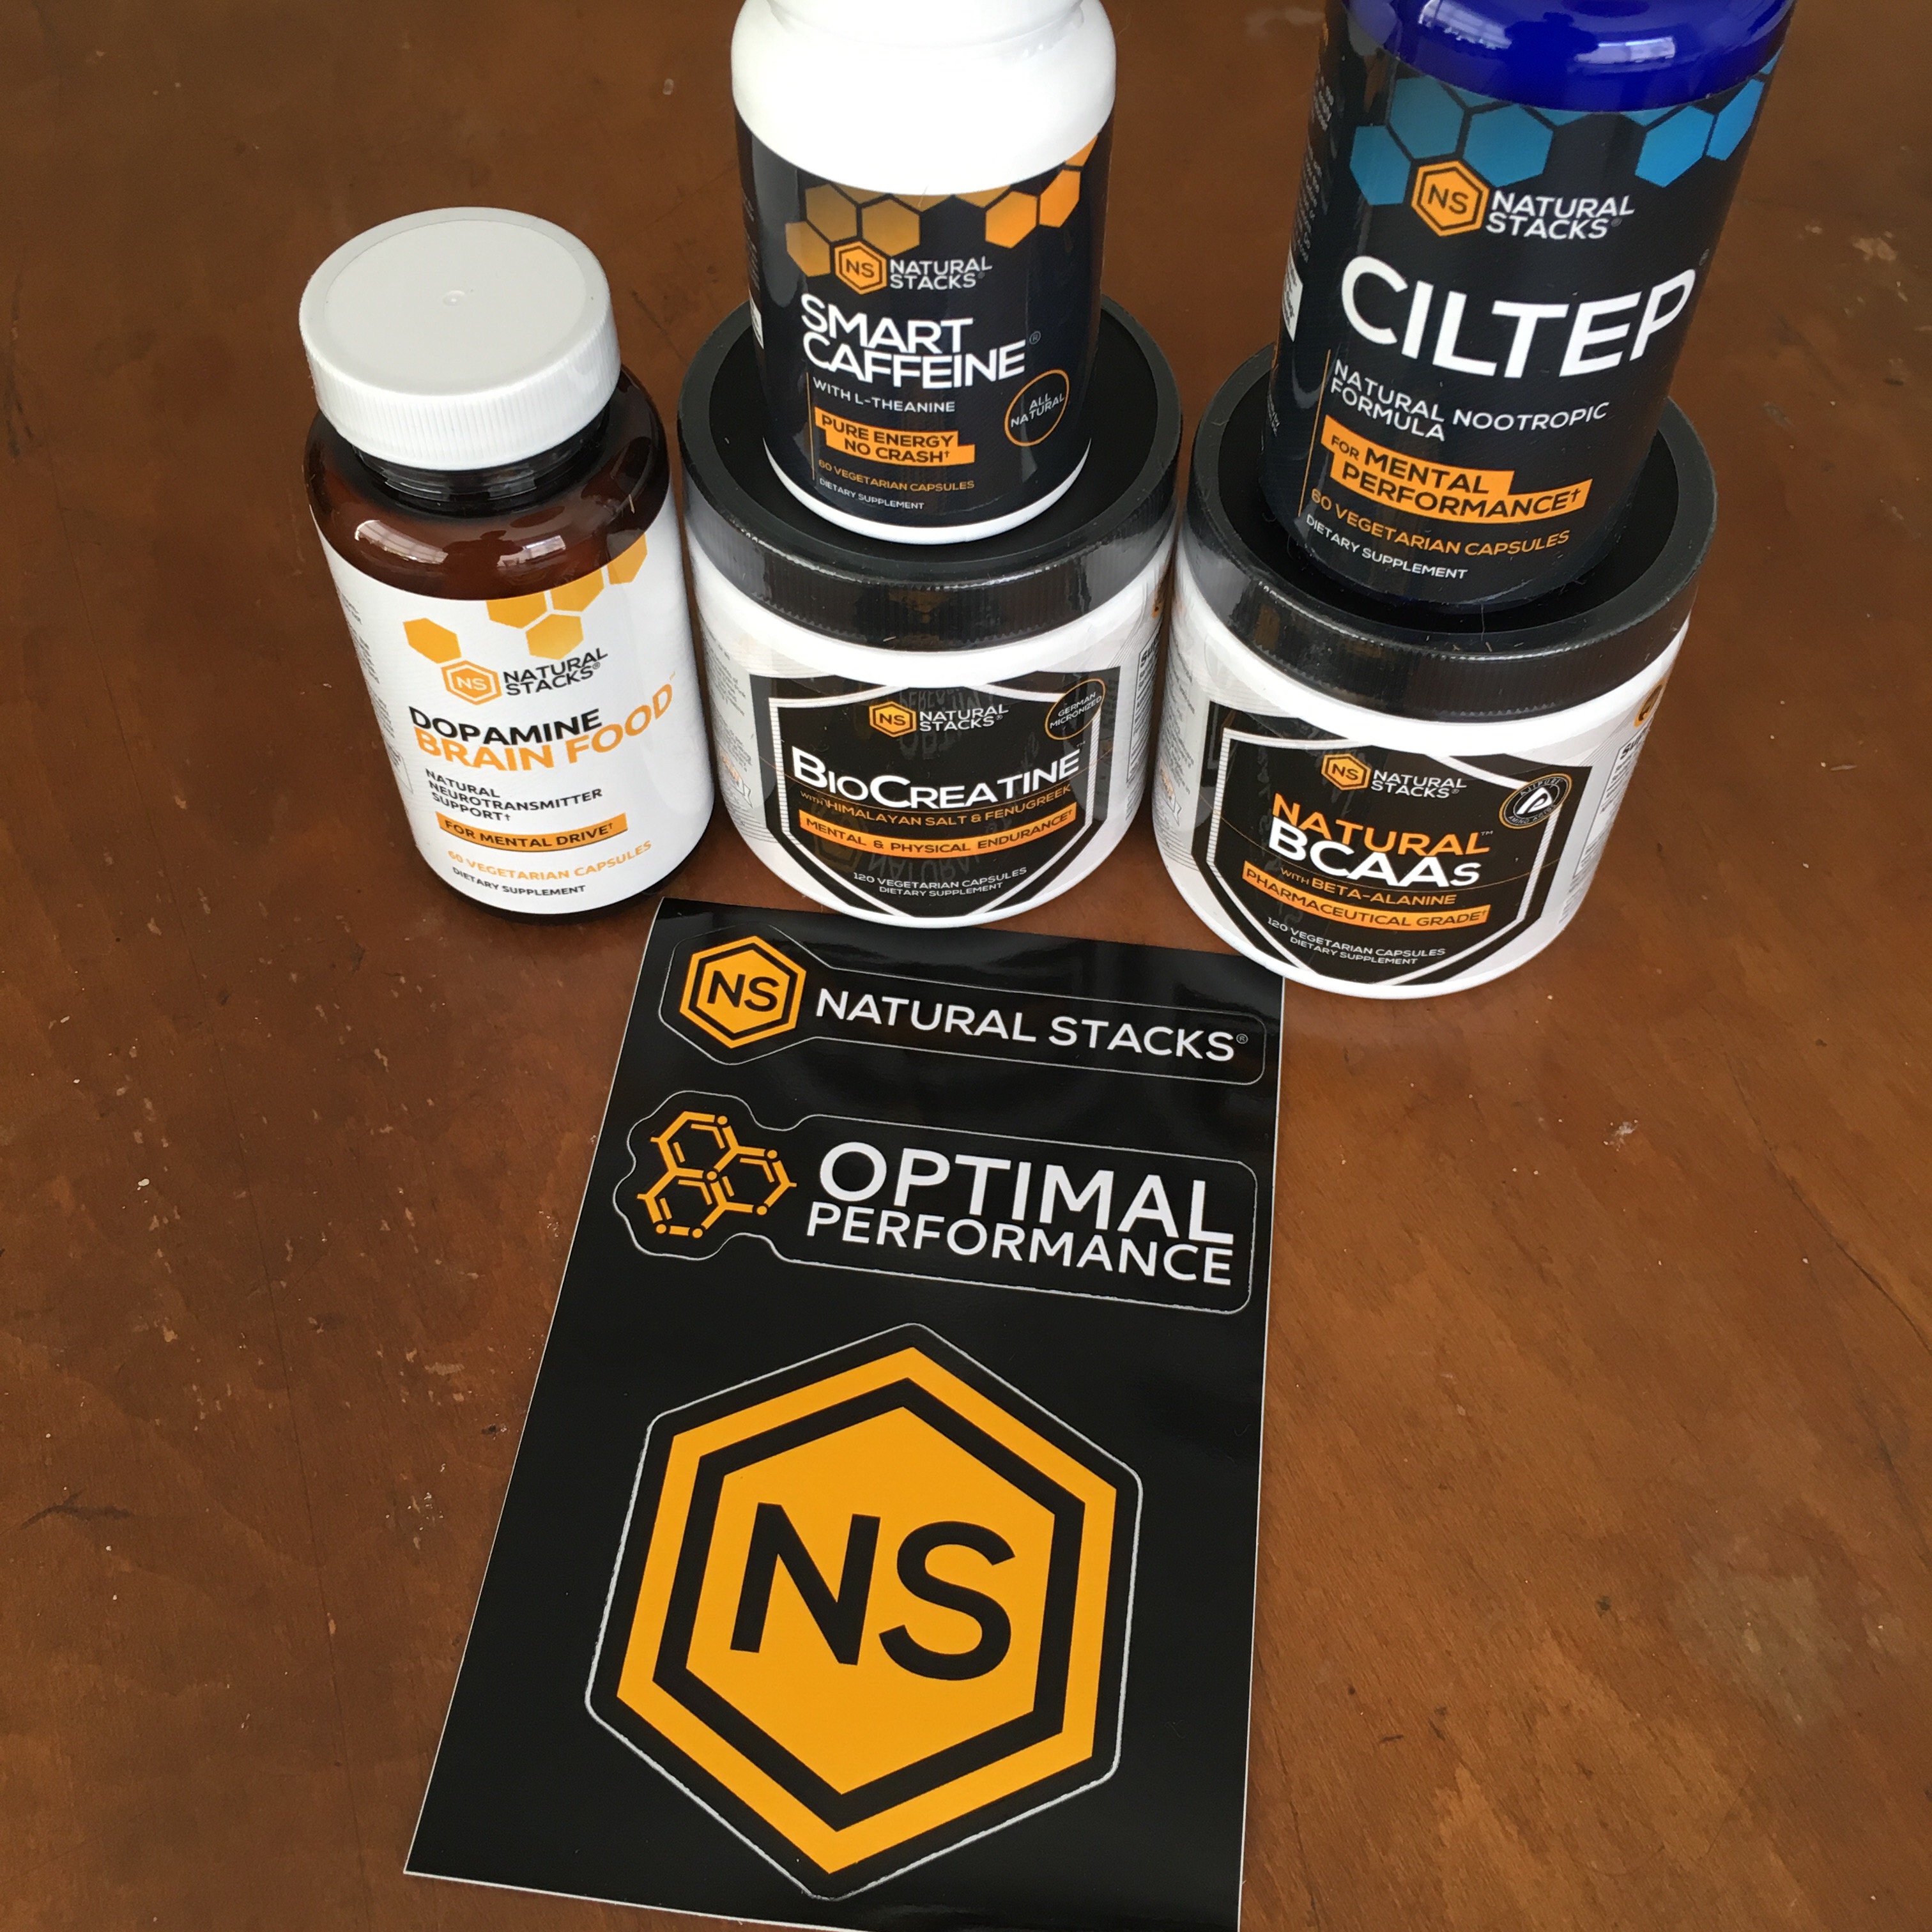 Natural Stacks supplements